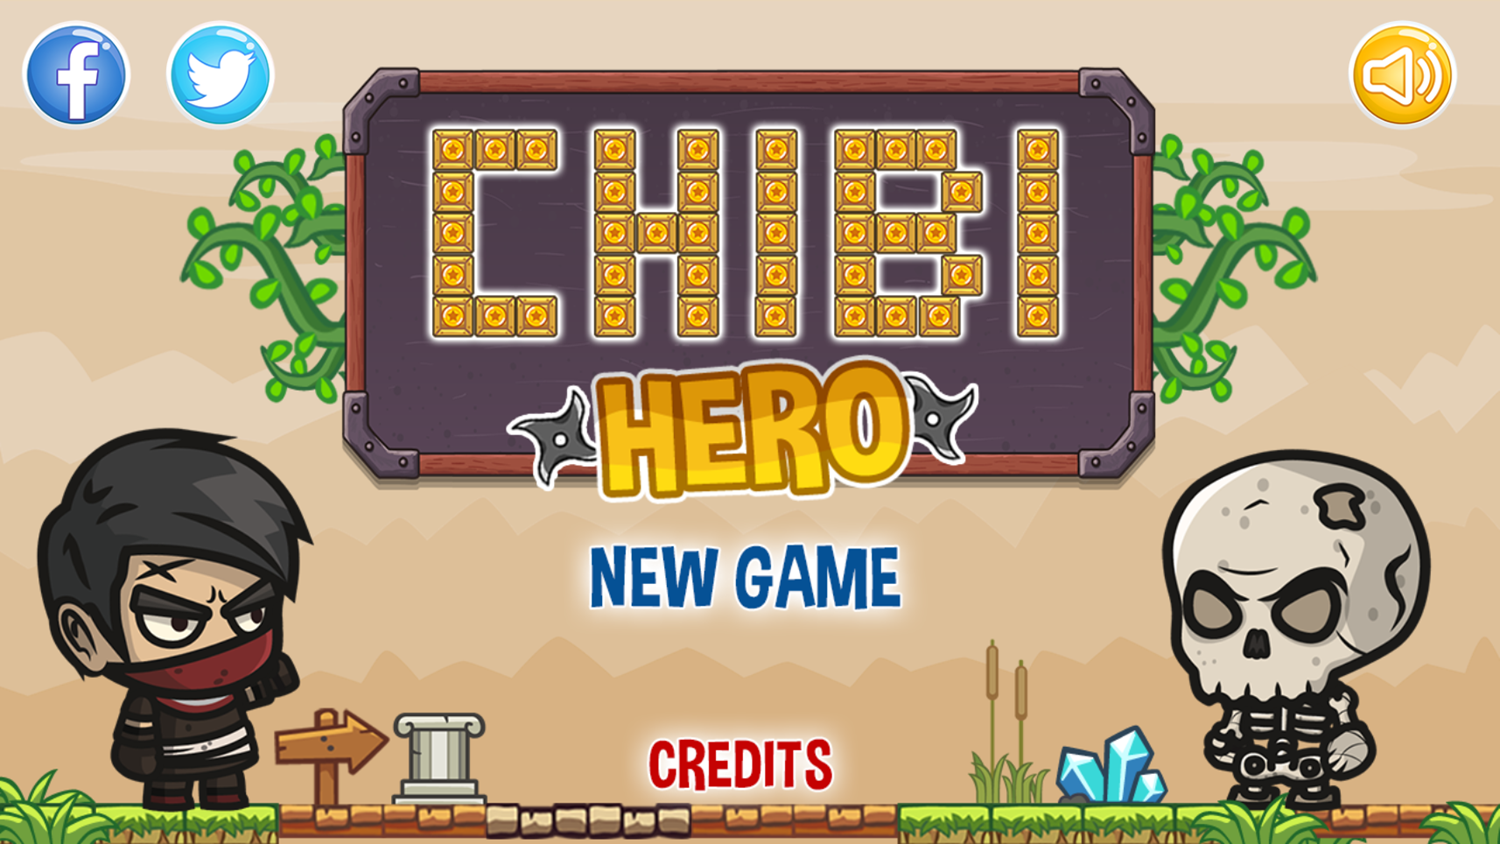 Chibi Hero Game Welcome Screen Screenshot.